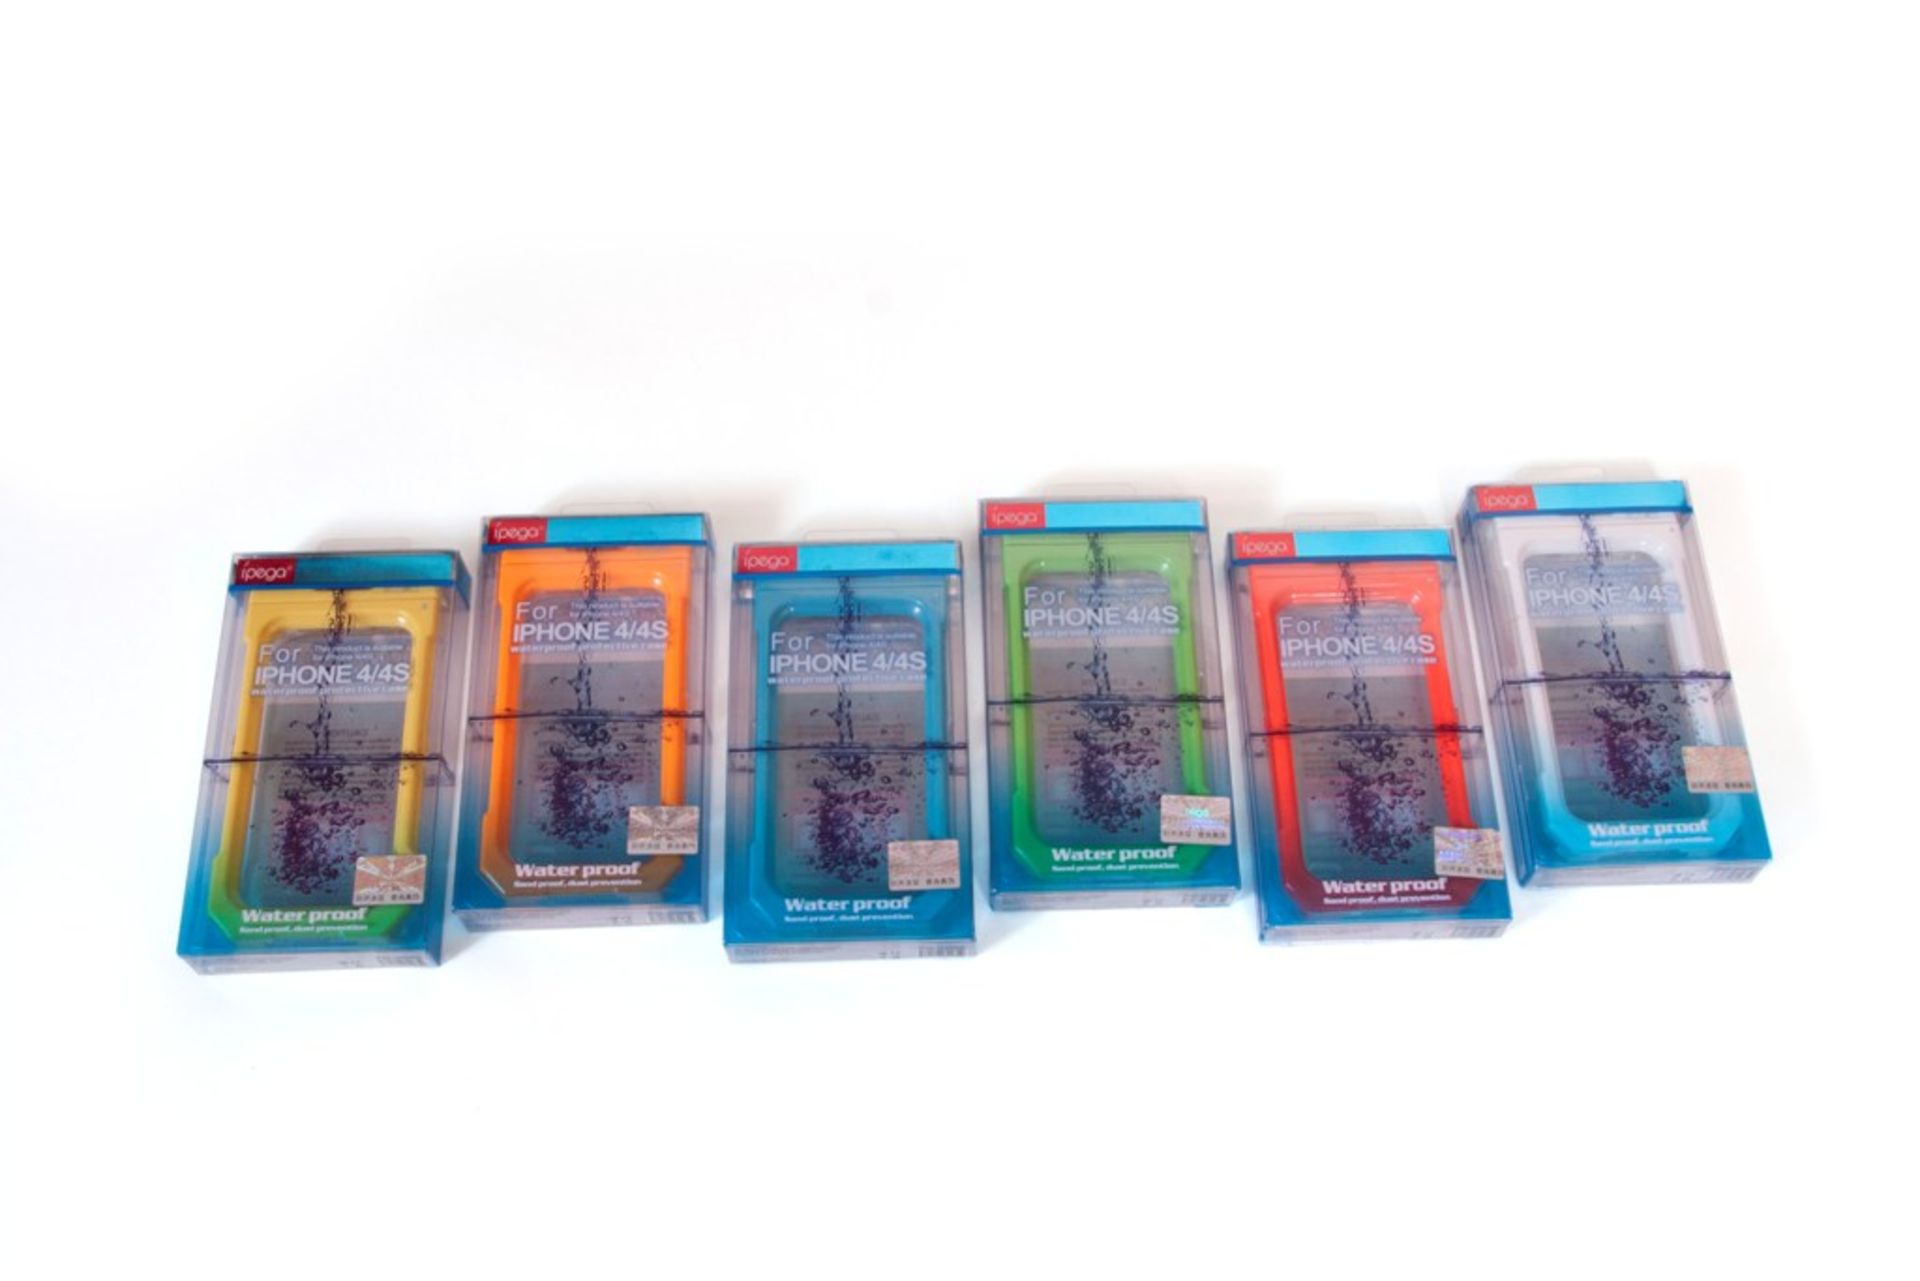 97x Ipega Waterproof iPhone 4 cases in various colours - Image 3 of 3